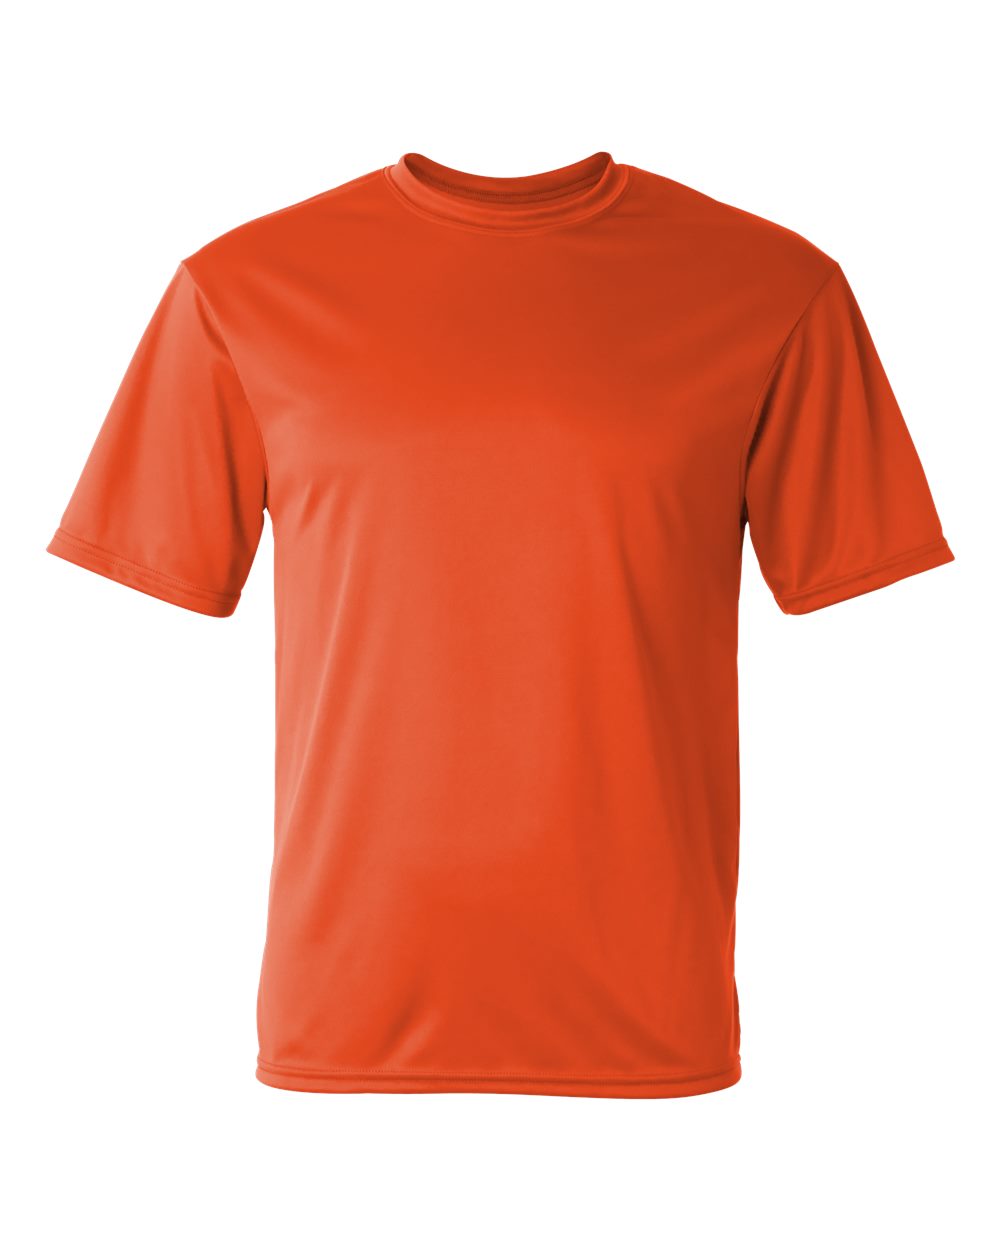 C2 Sport - Performance T-Shirt - 5100, 100% Polyester